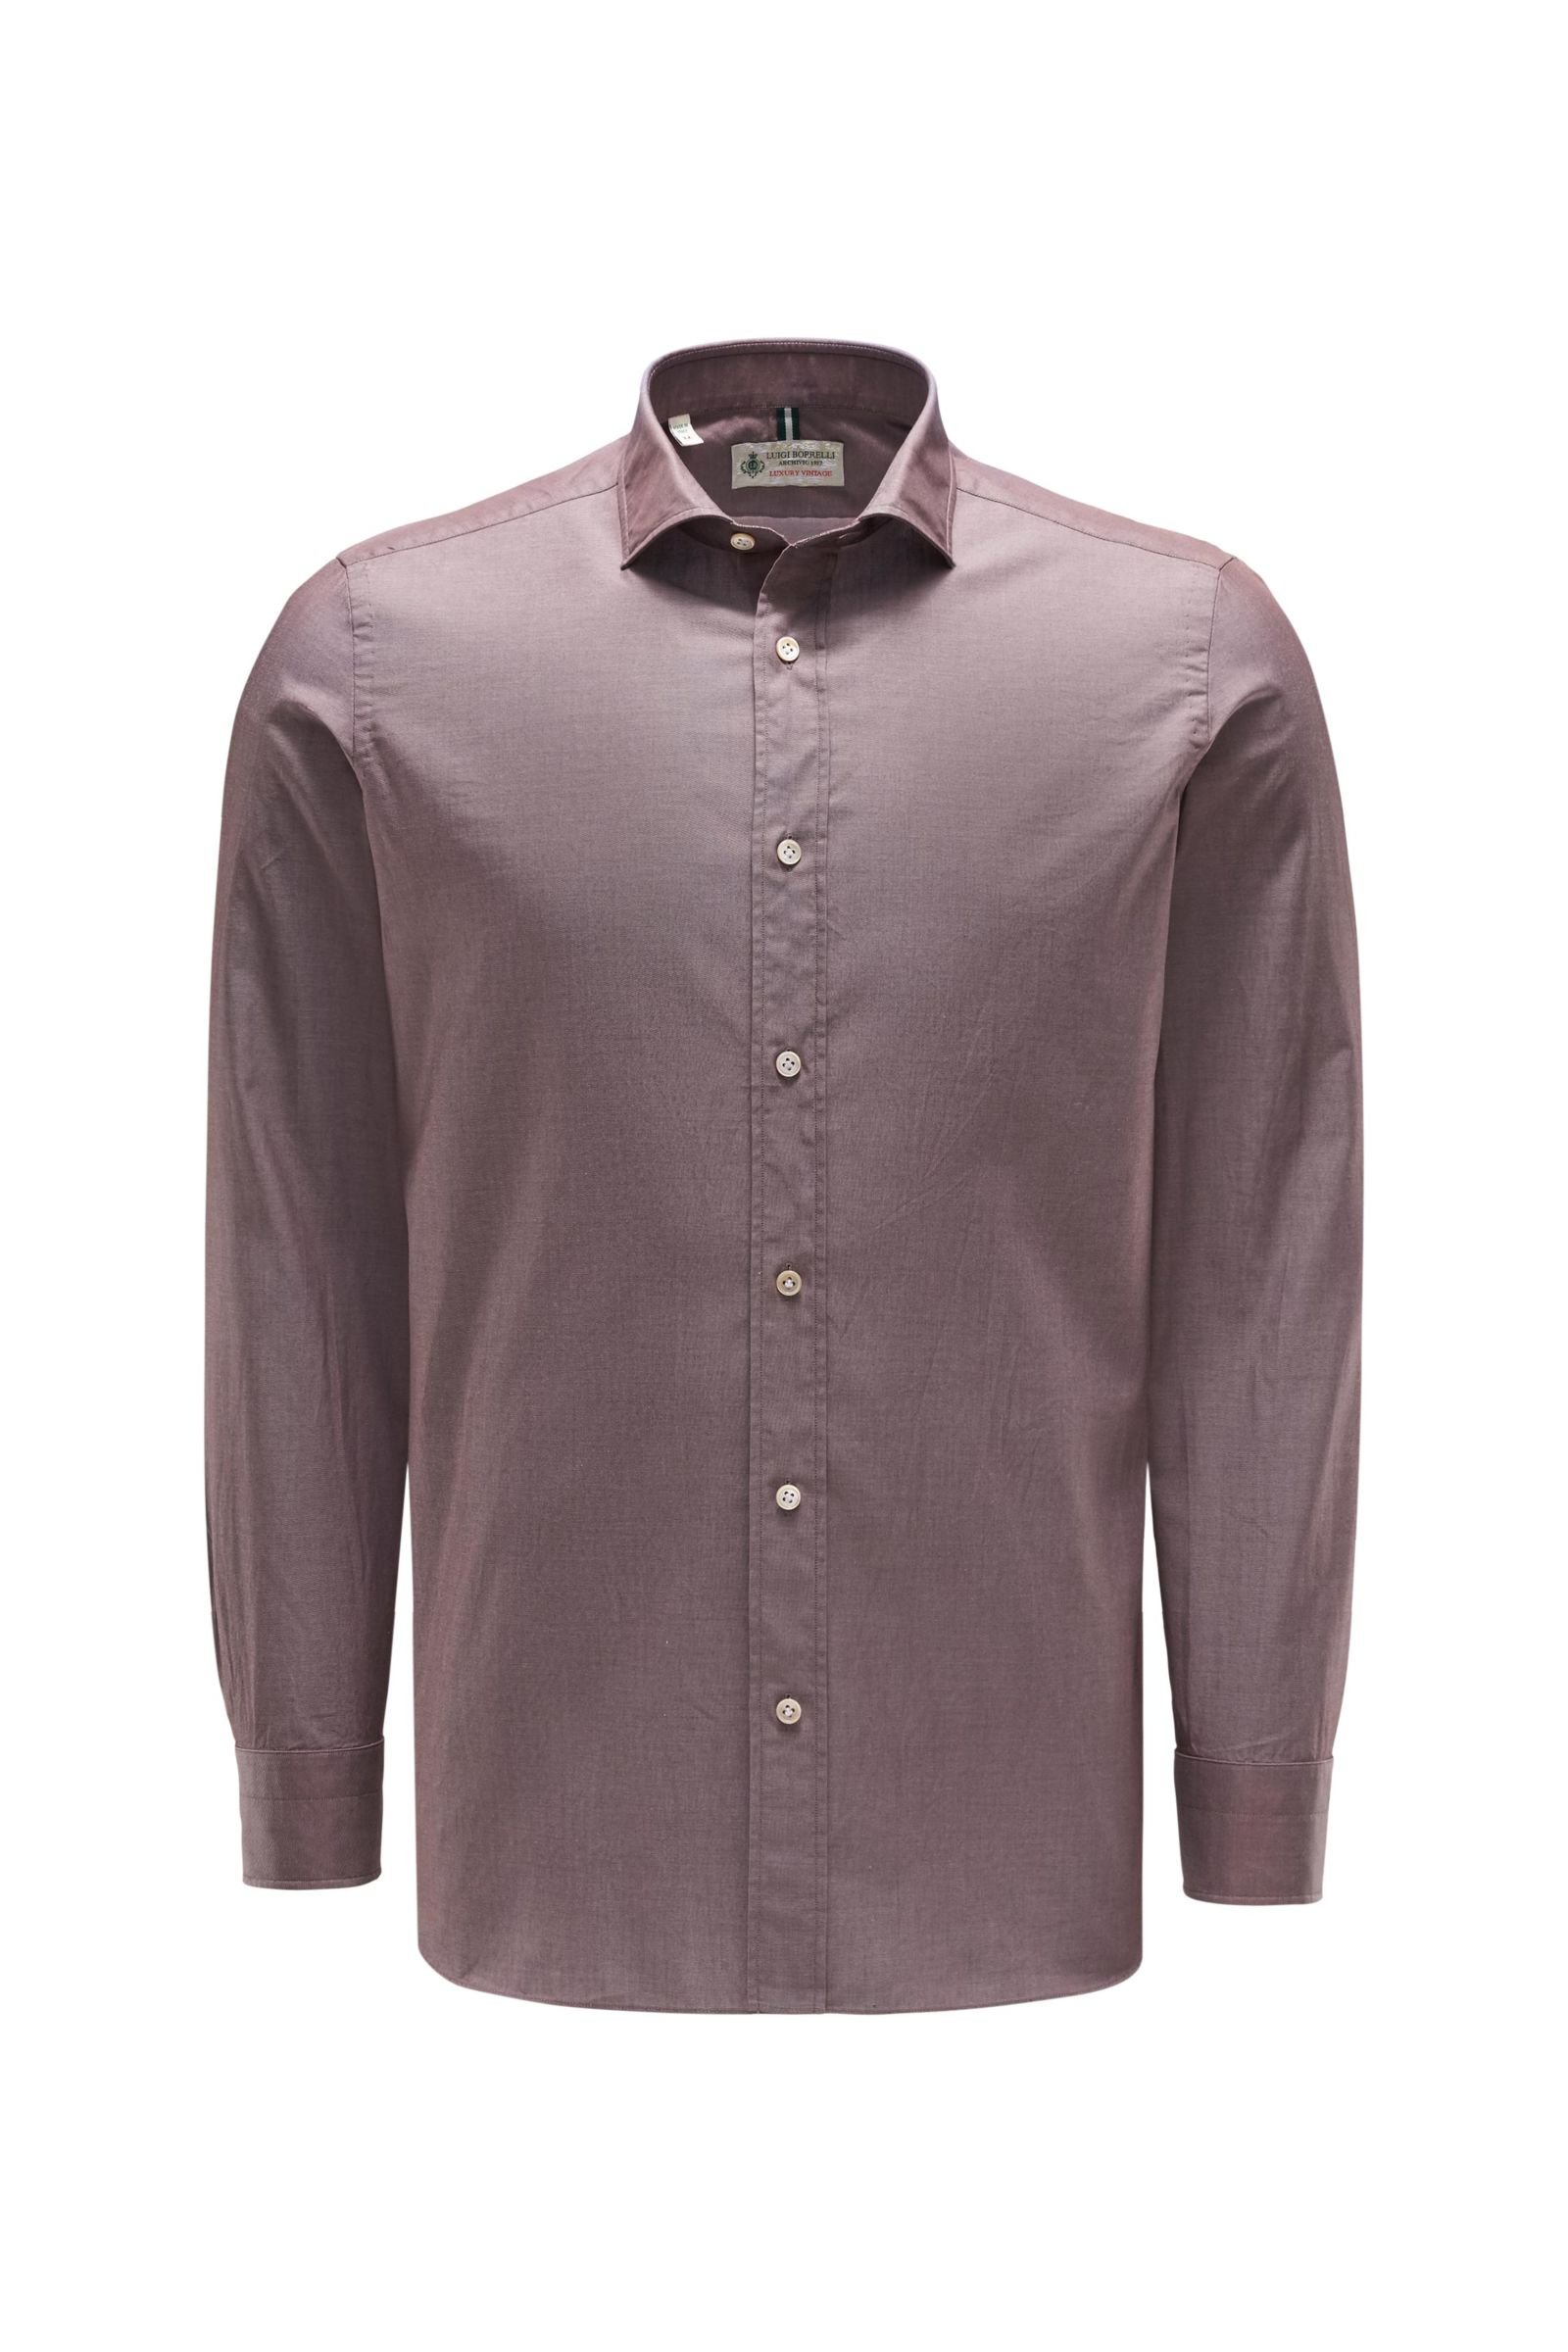 Chambray shirt slim collar grey-brown